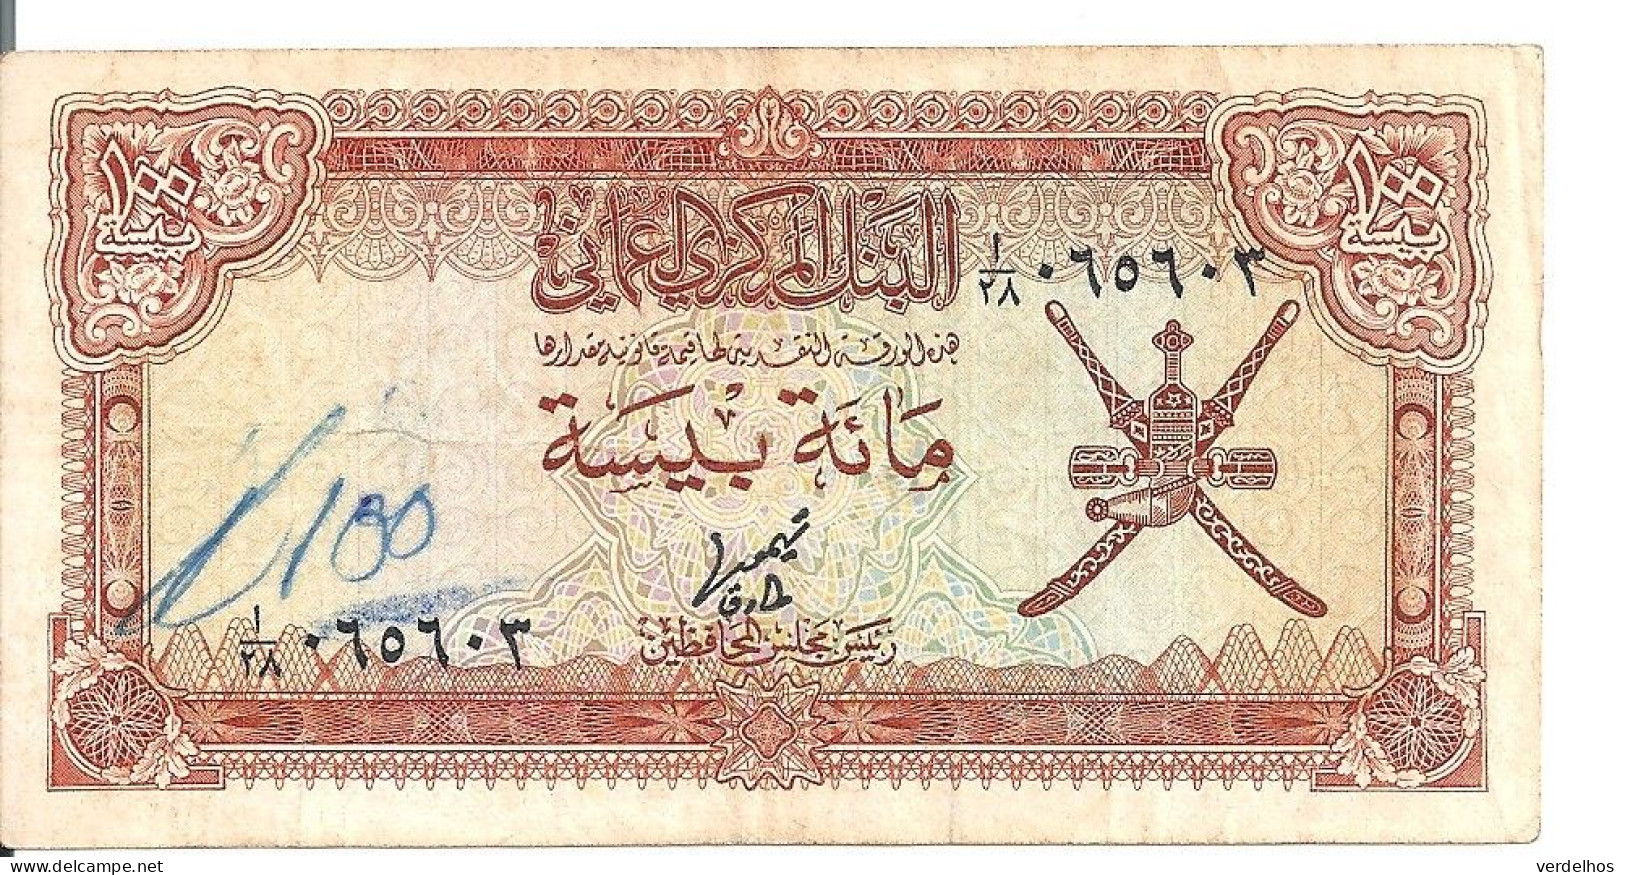 OMAN 100 BAISA ND1977 VF P 13 - Oman